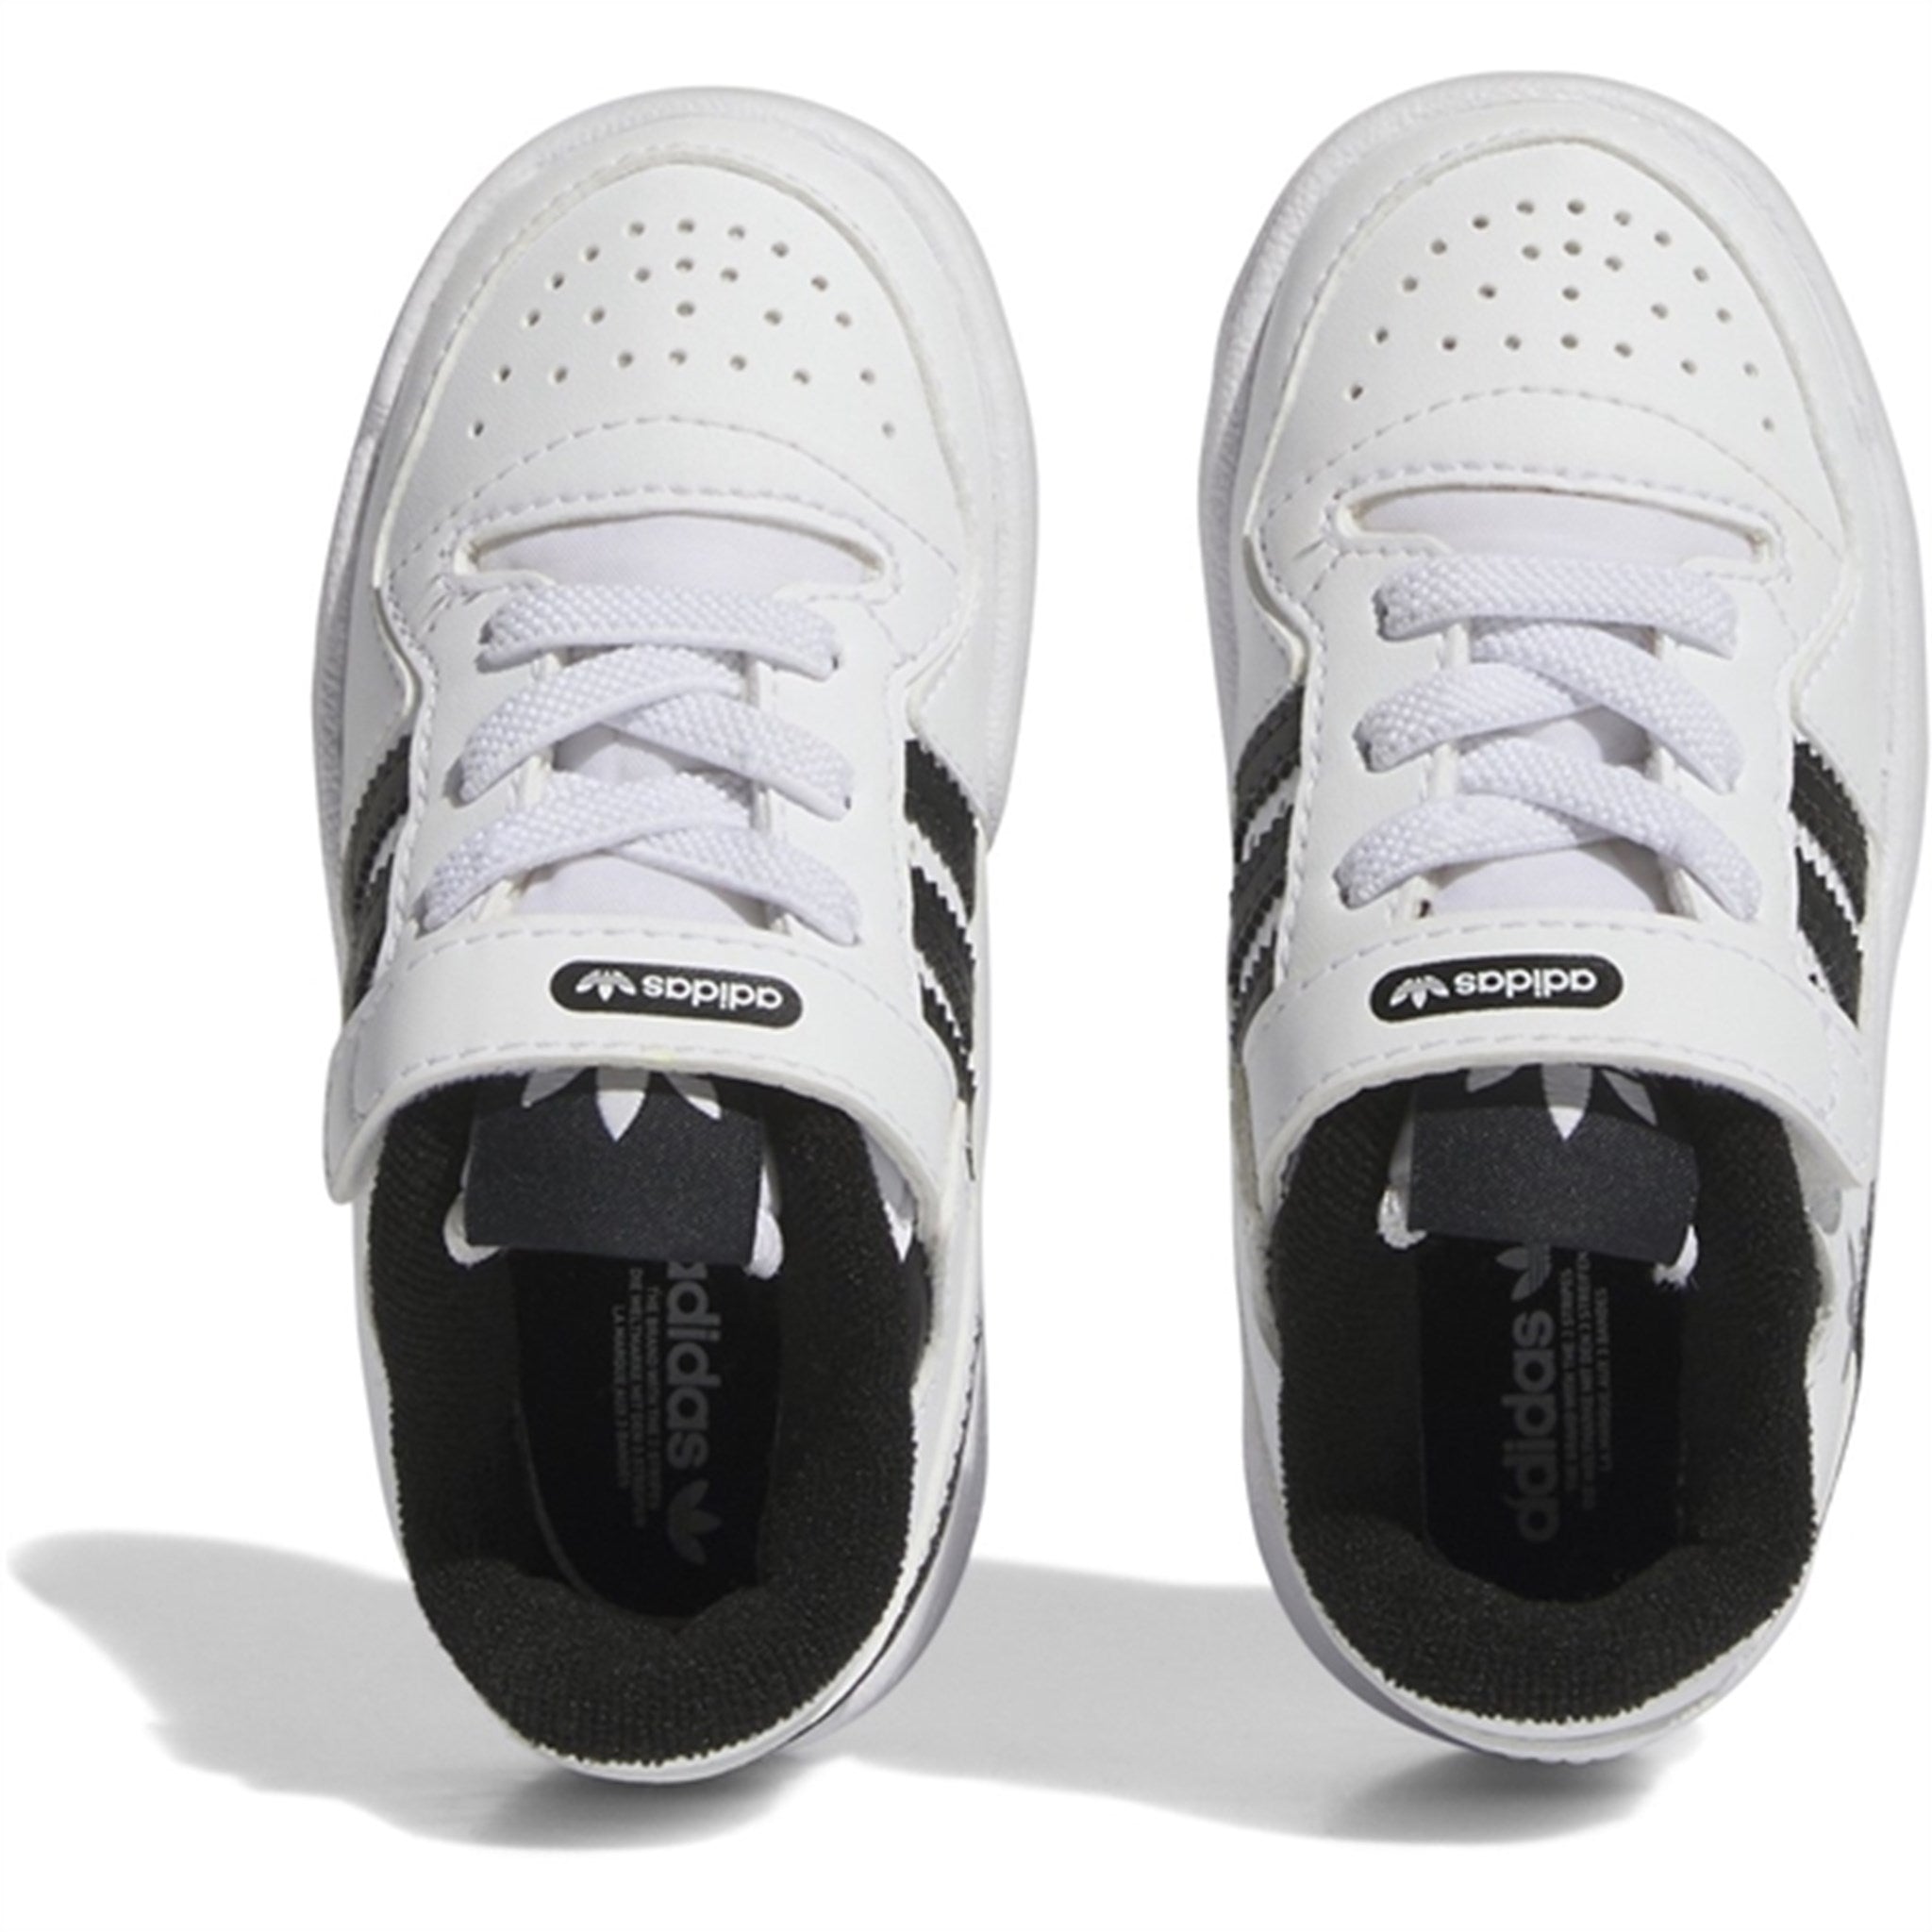 adidas Originals Forum Low Infant Sneakers Black/White 2